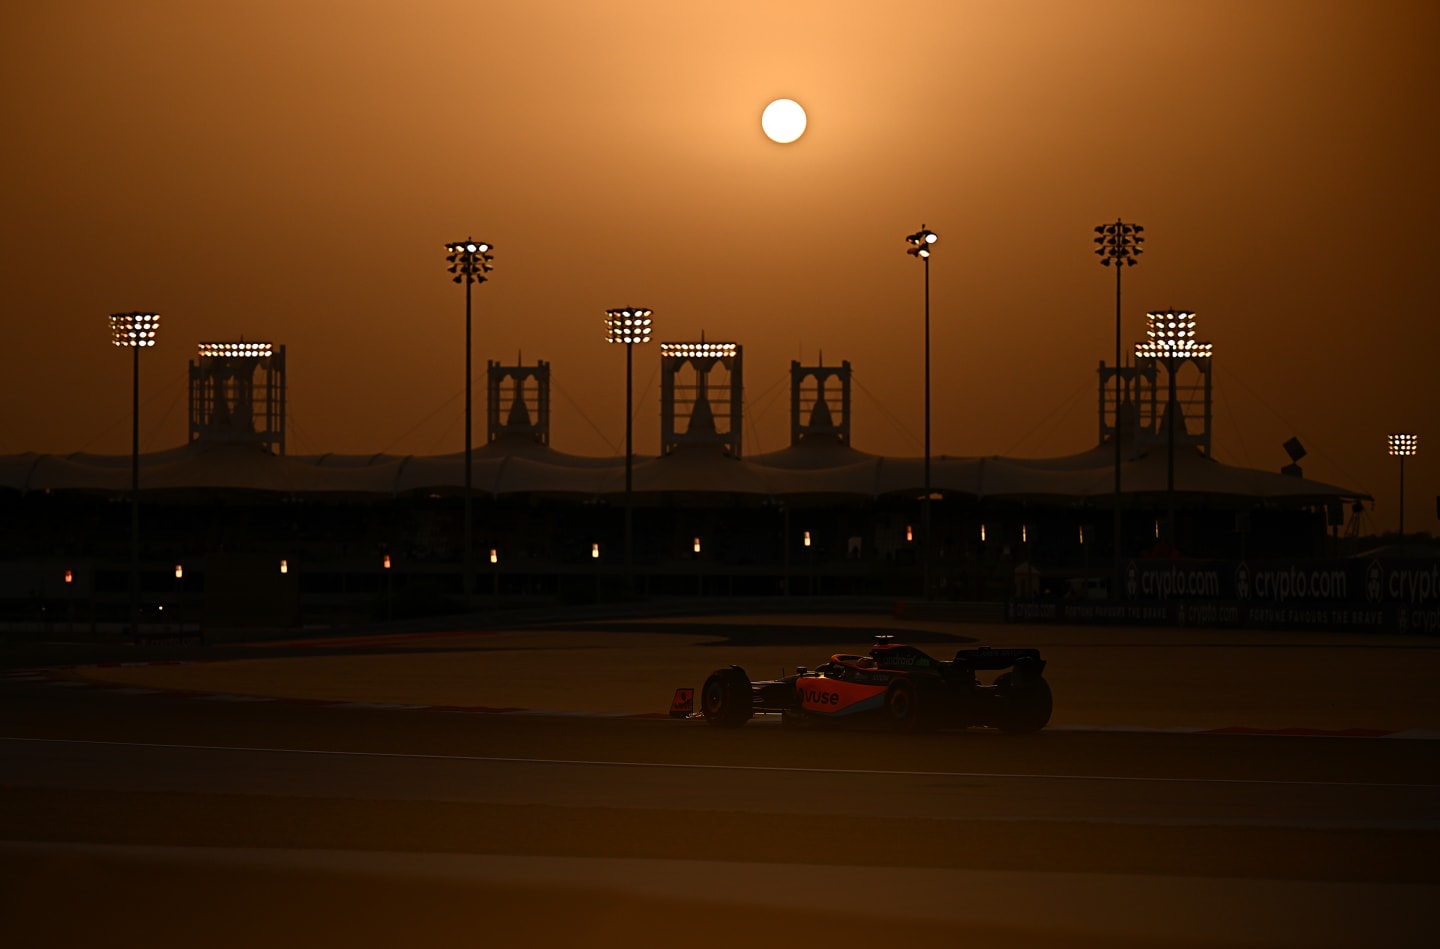 BAHRAIN, BAHRAIN - MARCH 20: Daniel Ricciardo of Australia driving the (3) McLaren MCL36 Mercedes on his way to the grid before the F1 Grand Prix of Bahrain at Bahrain International Circuit on March 20, 2022 in Bahrain, Bahrain. (Photo by Clive Mason/Getty Images)